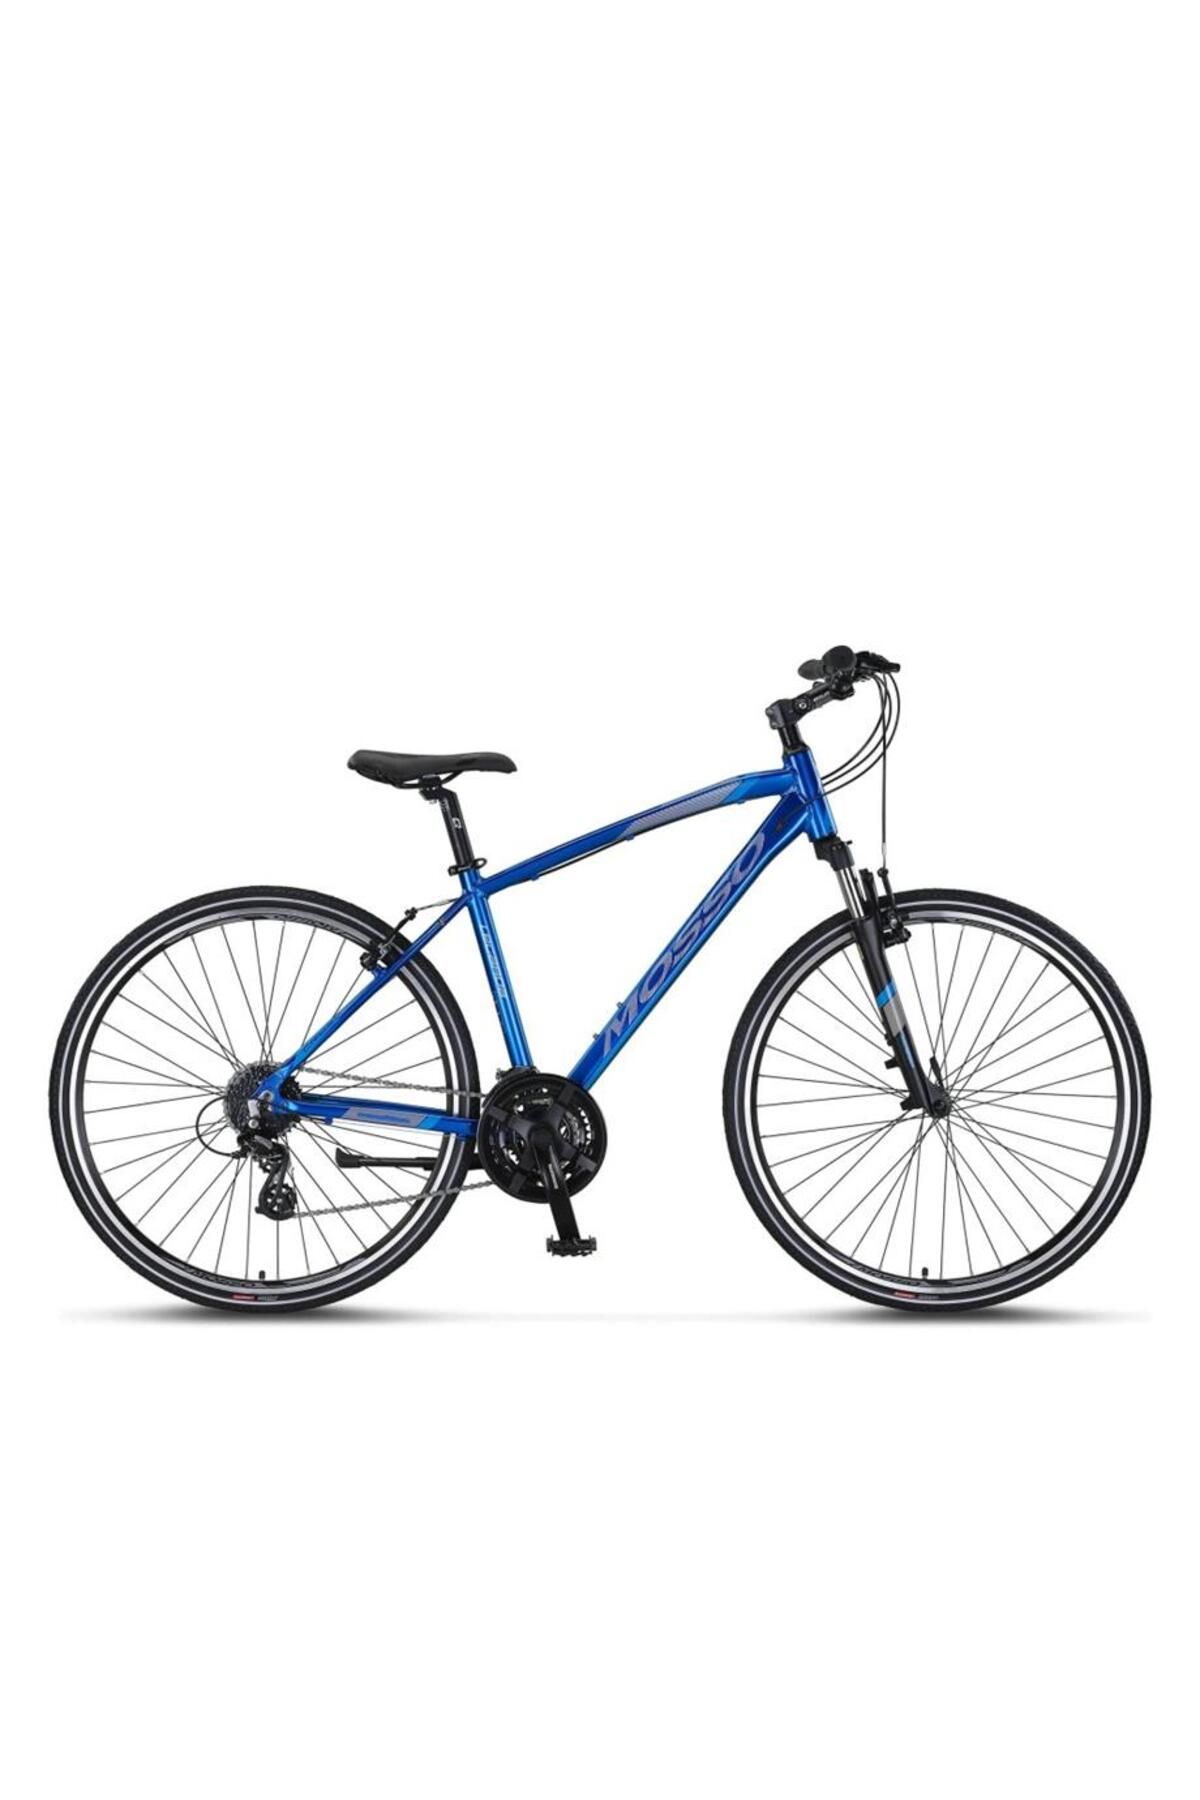 Mosso Legarda-2324-msm-v Erkek Şehir Bisikleti 510h 28 Jant 24 Vites Lacivert Mavi